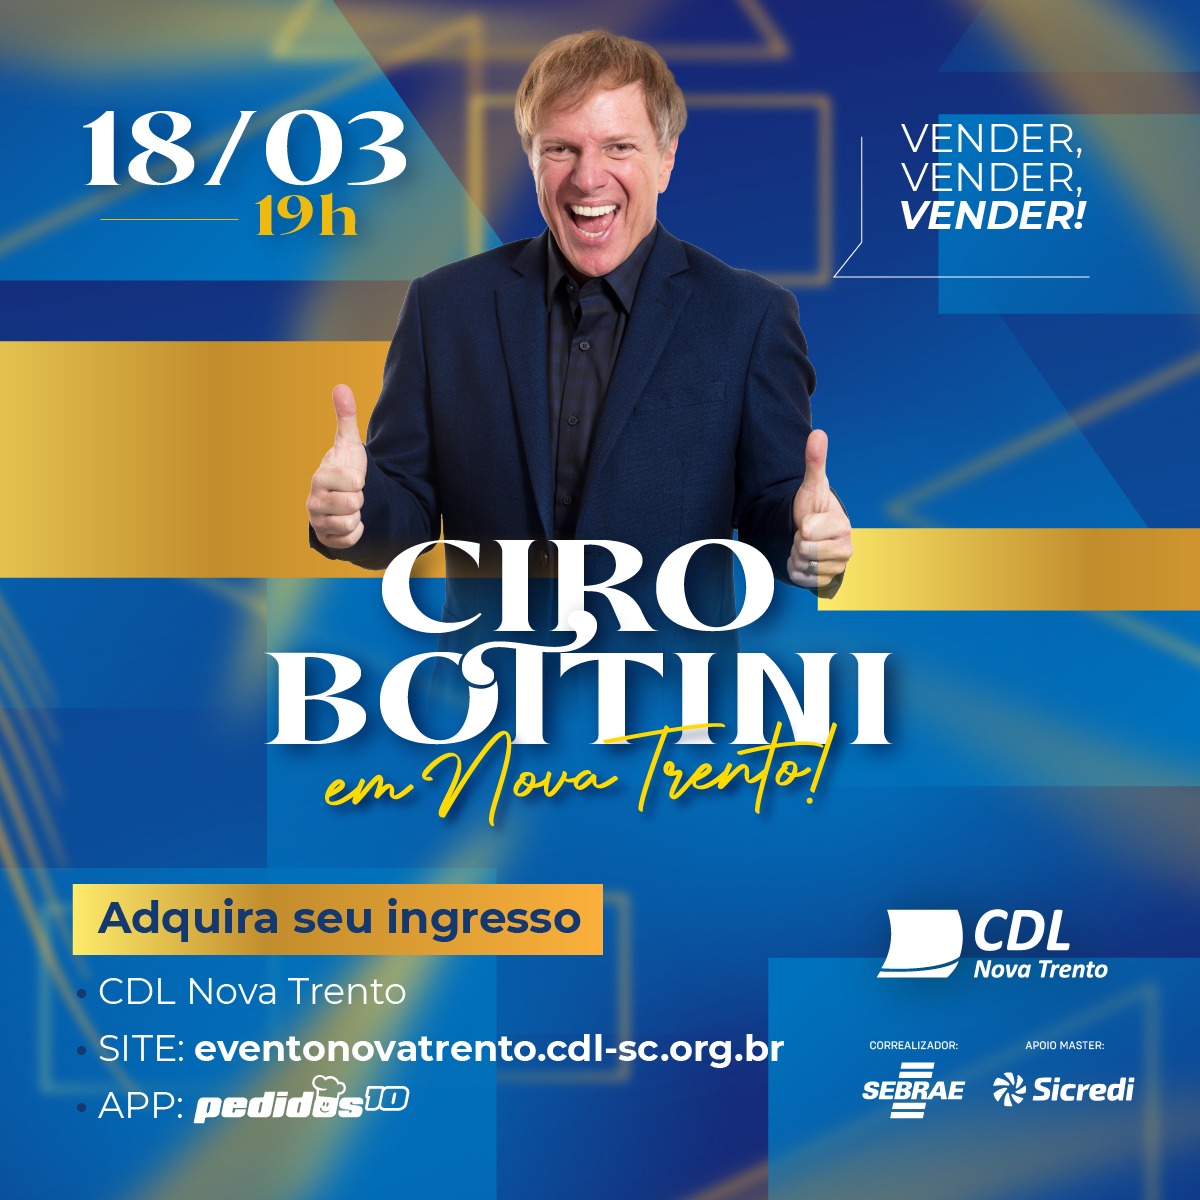 CDL Nova Trento realiza palestra com Ciro Bottini